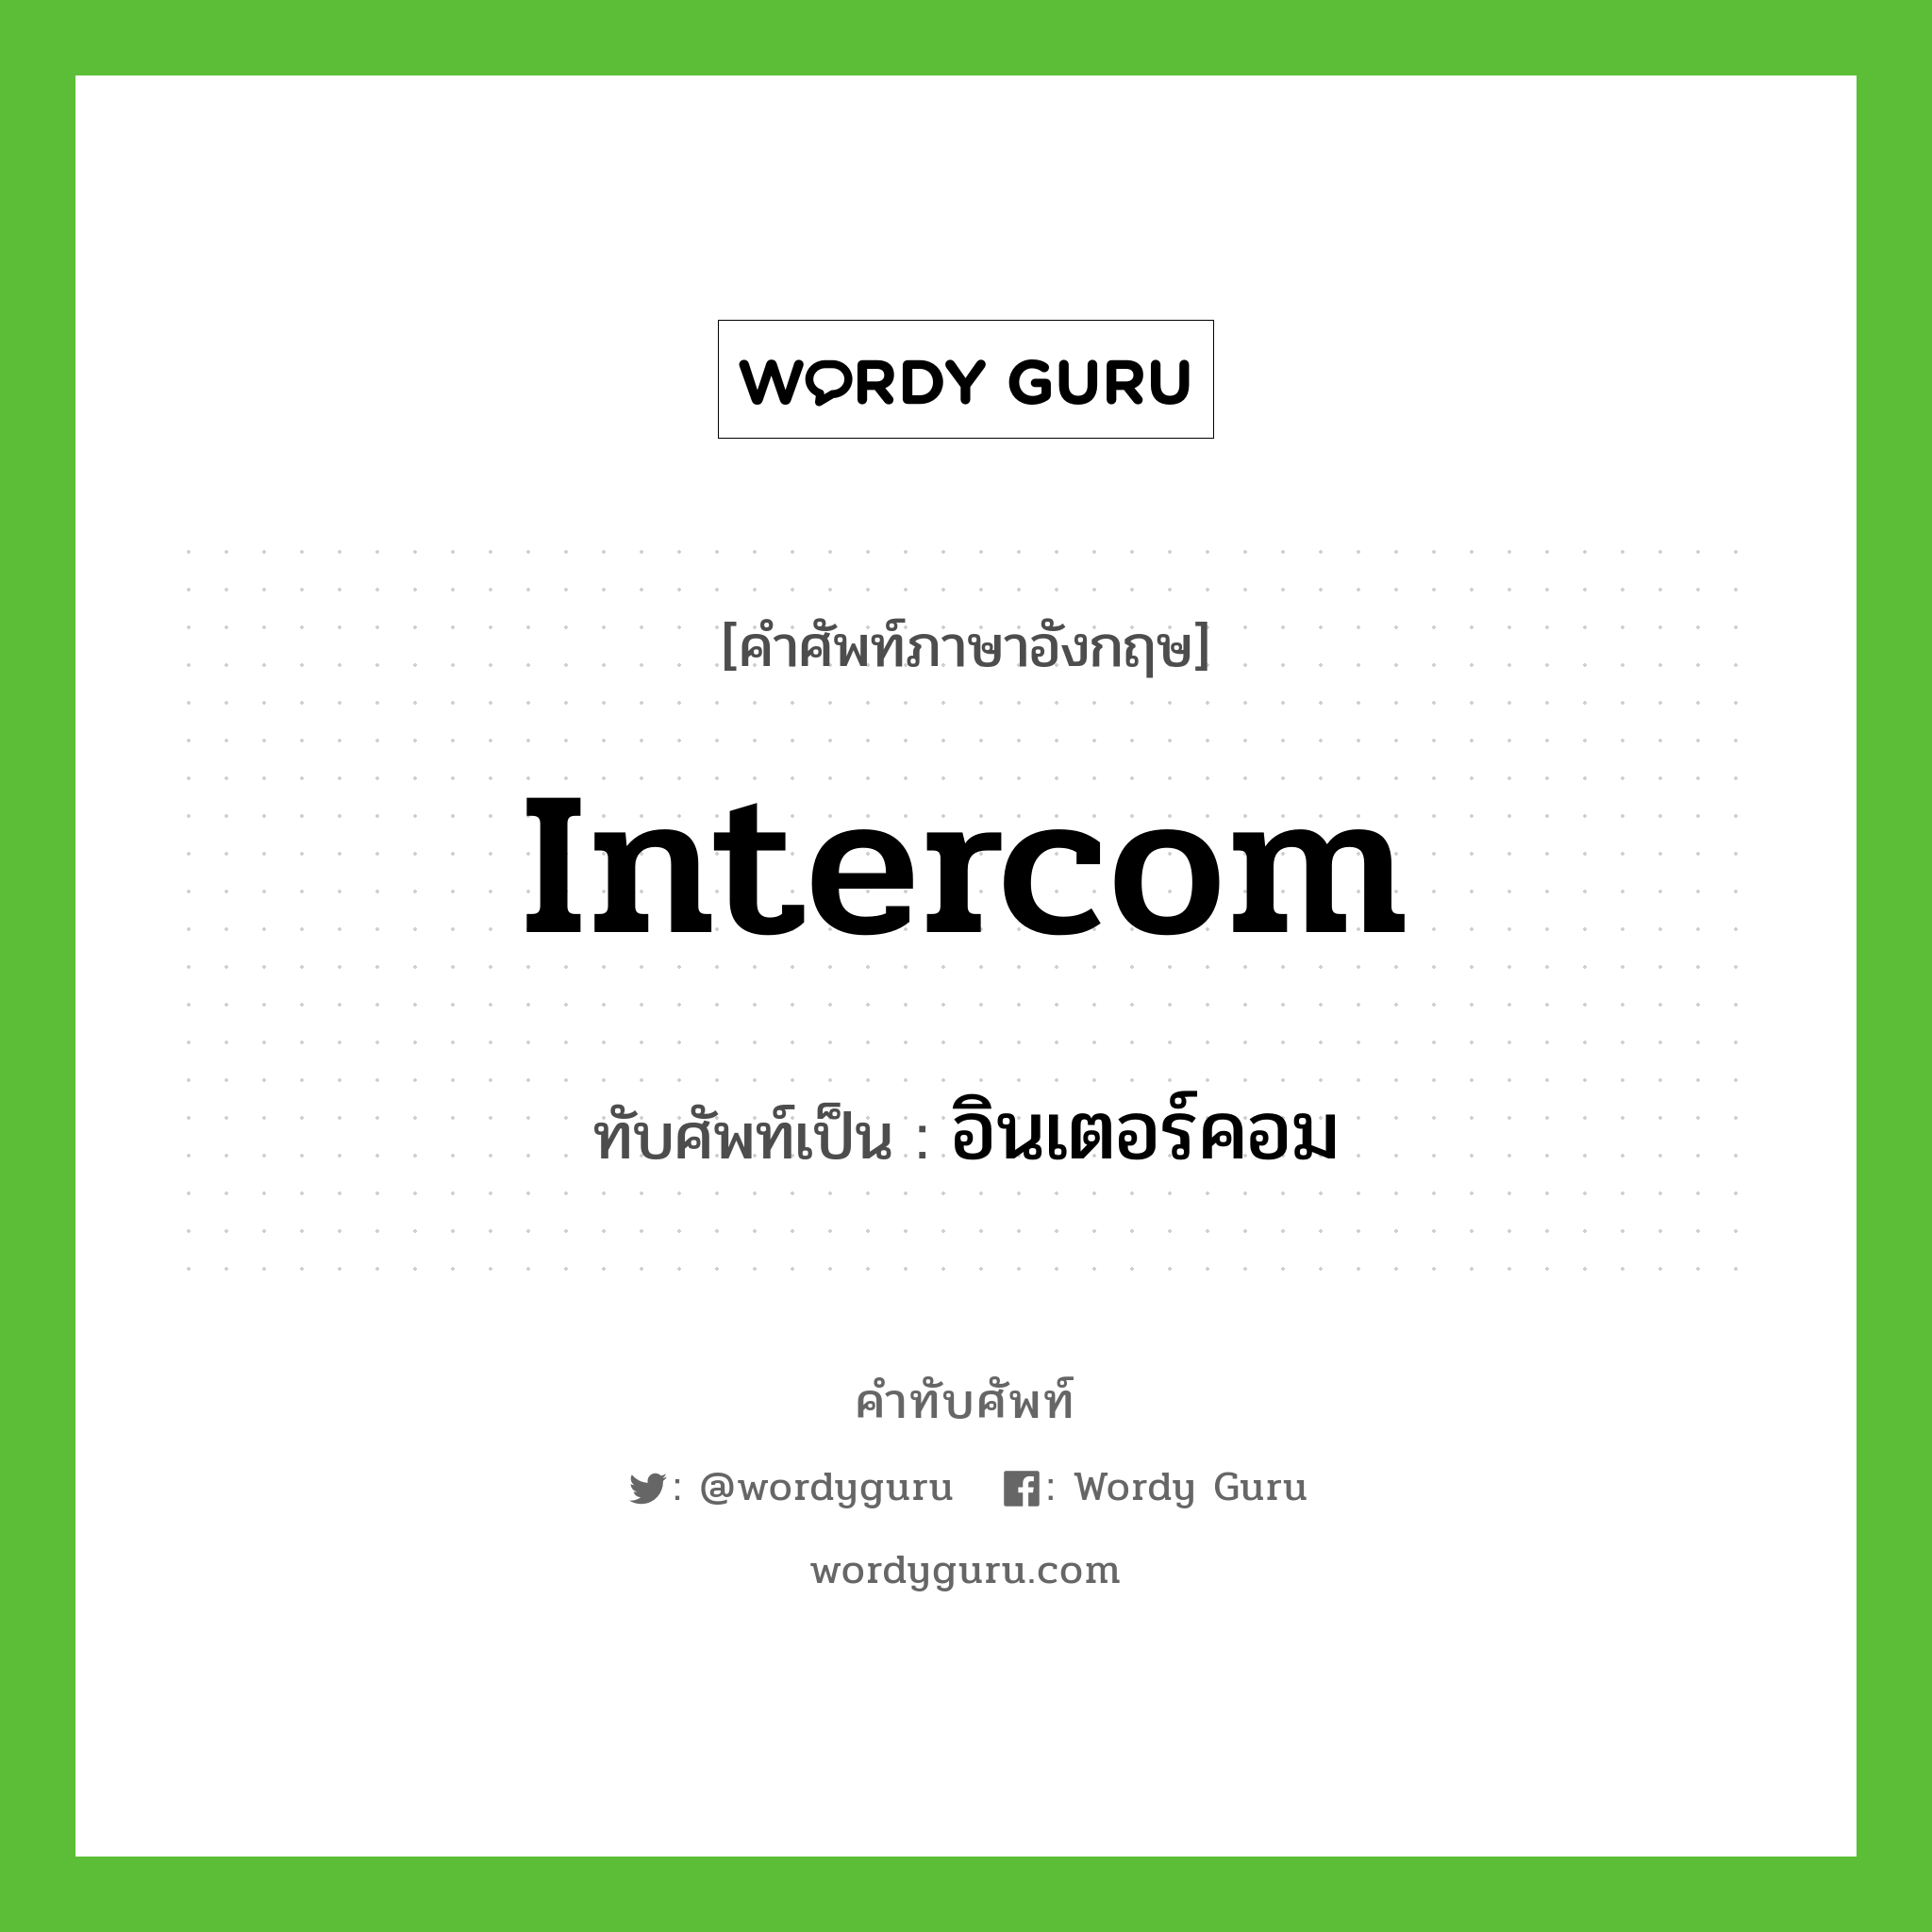 intercom เขียนเป็นคำไทยว่าอะไร?, คำศัพท์ภาษาอังกฤษ intercom ทับศัพท์เป็น อินเตอร์คอม